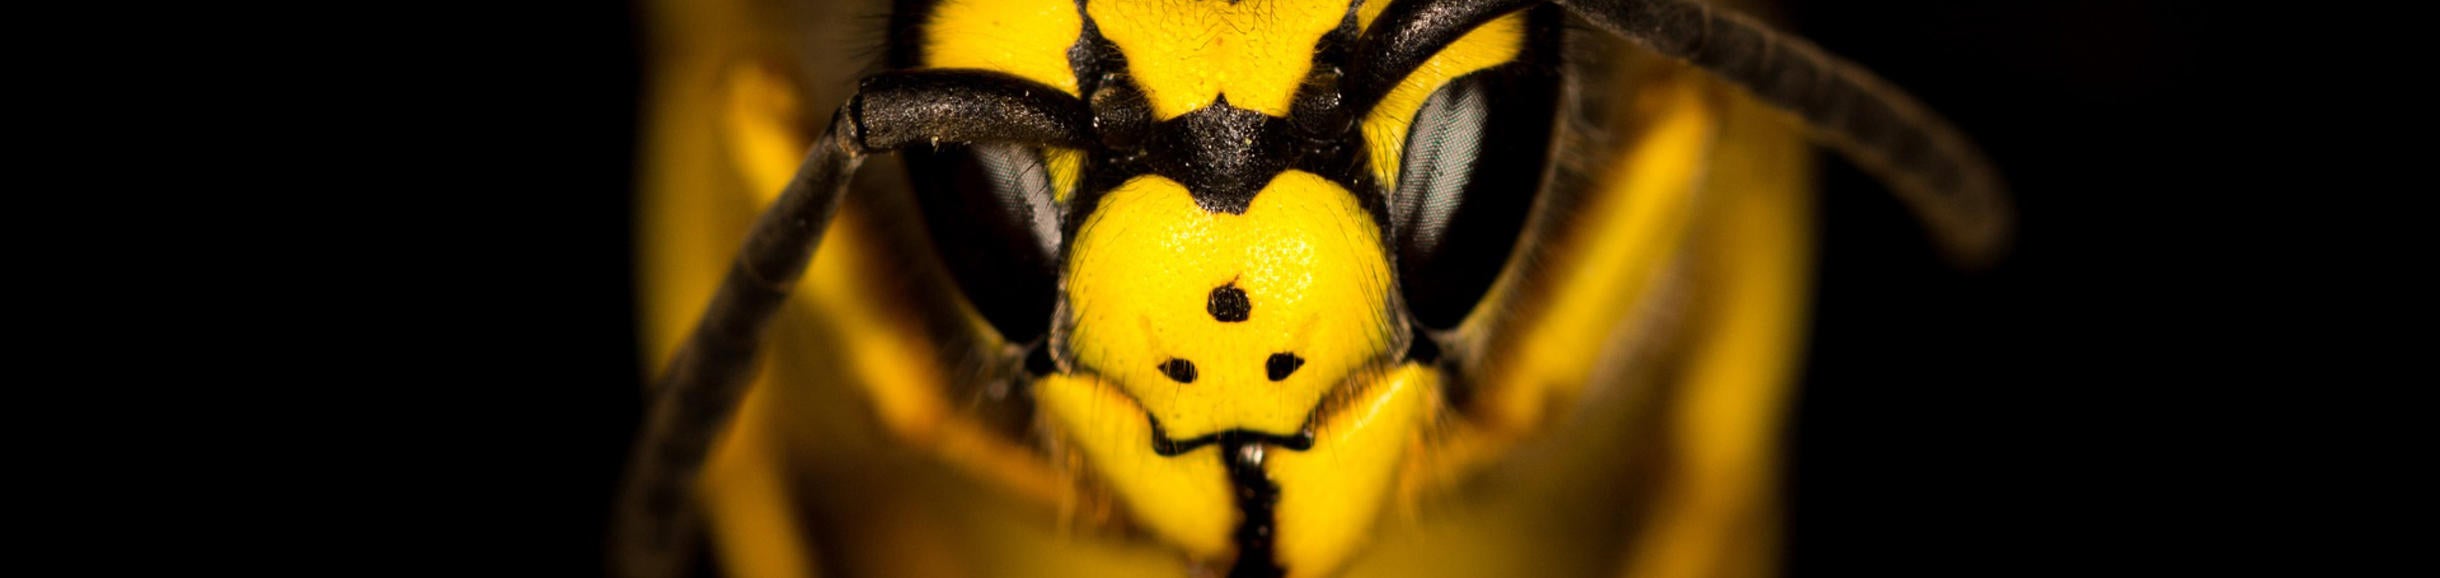 Wasp macro photography, Image by Anton Lovász from Pixabay 